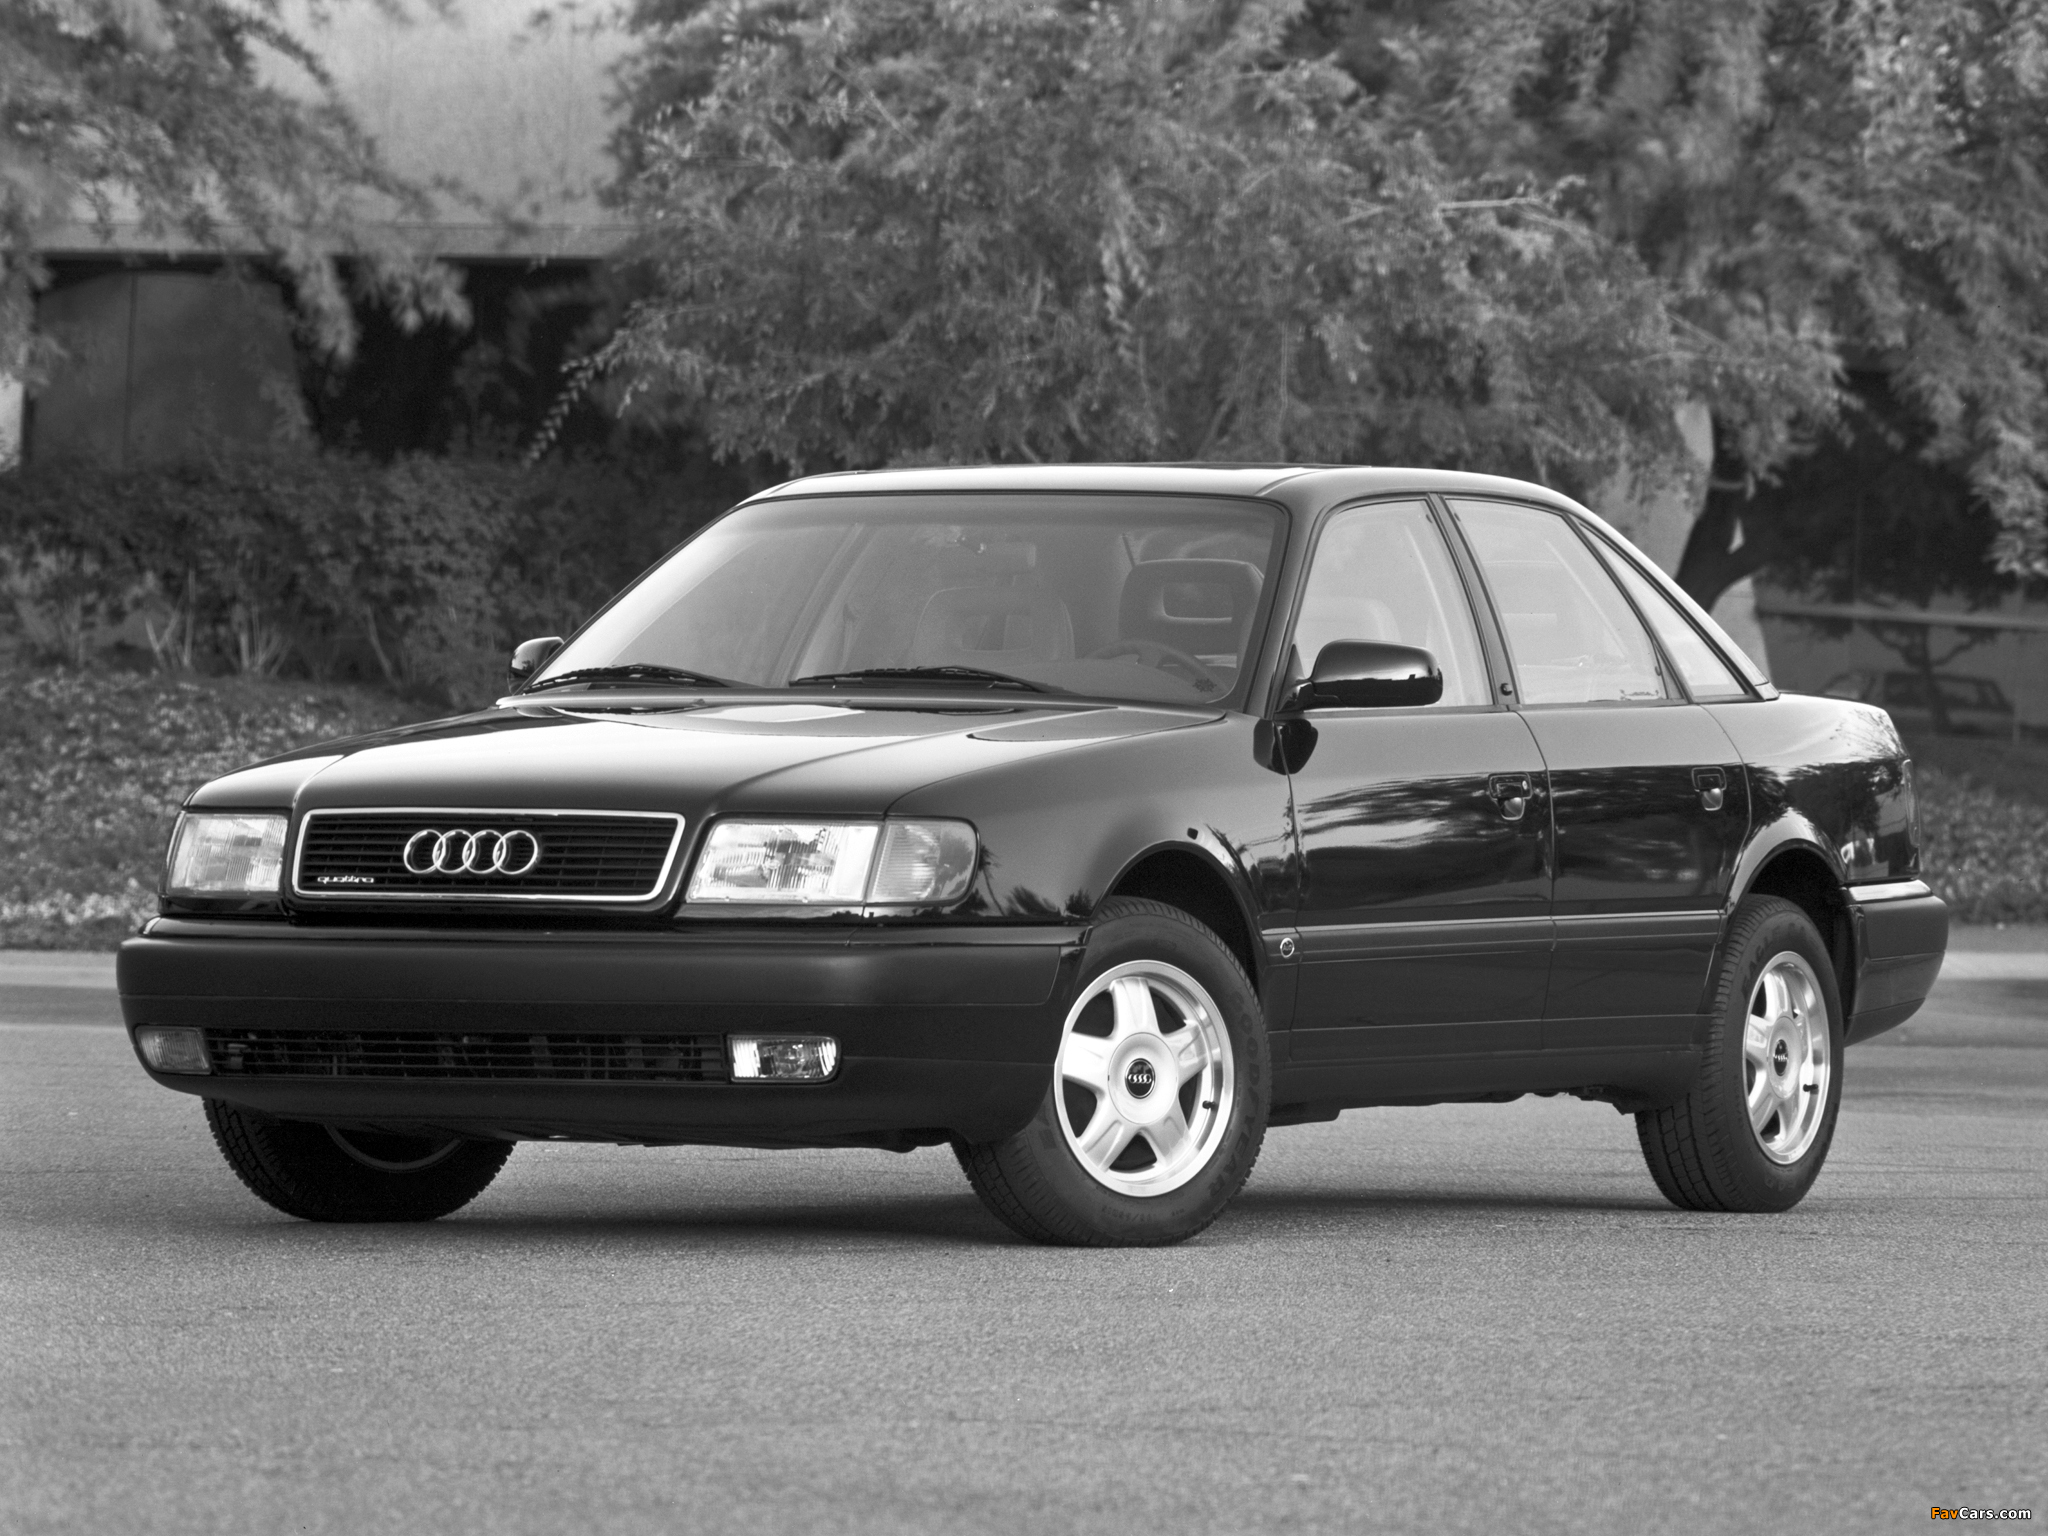 Кузов Audi 100 C4 – преимущества и особенности эксплуатации фото